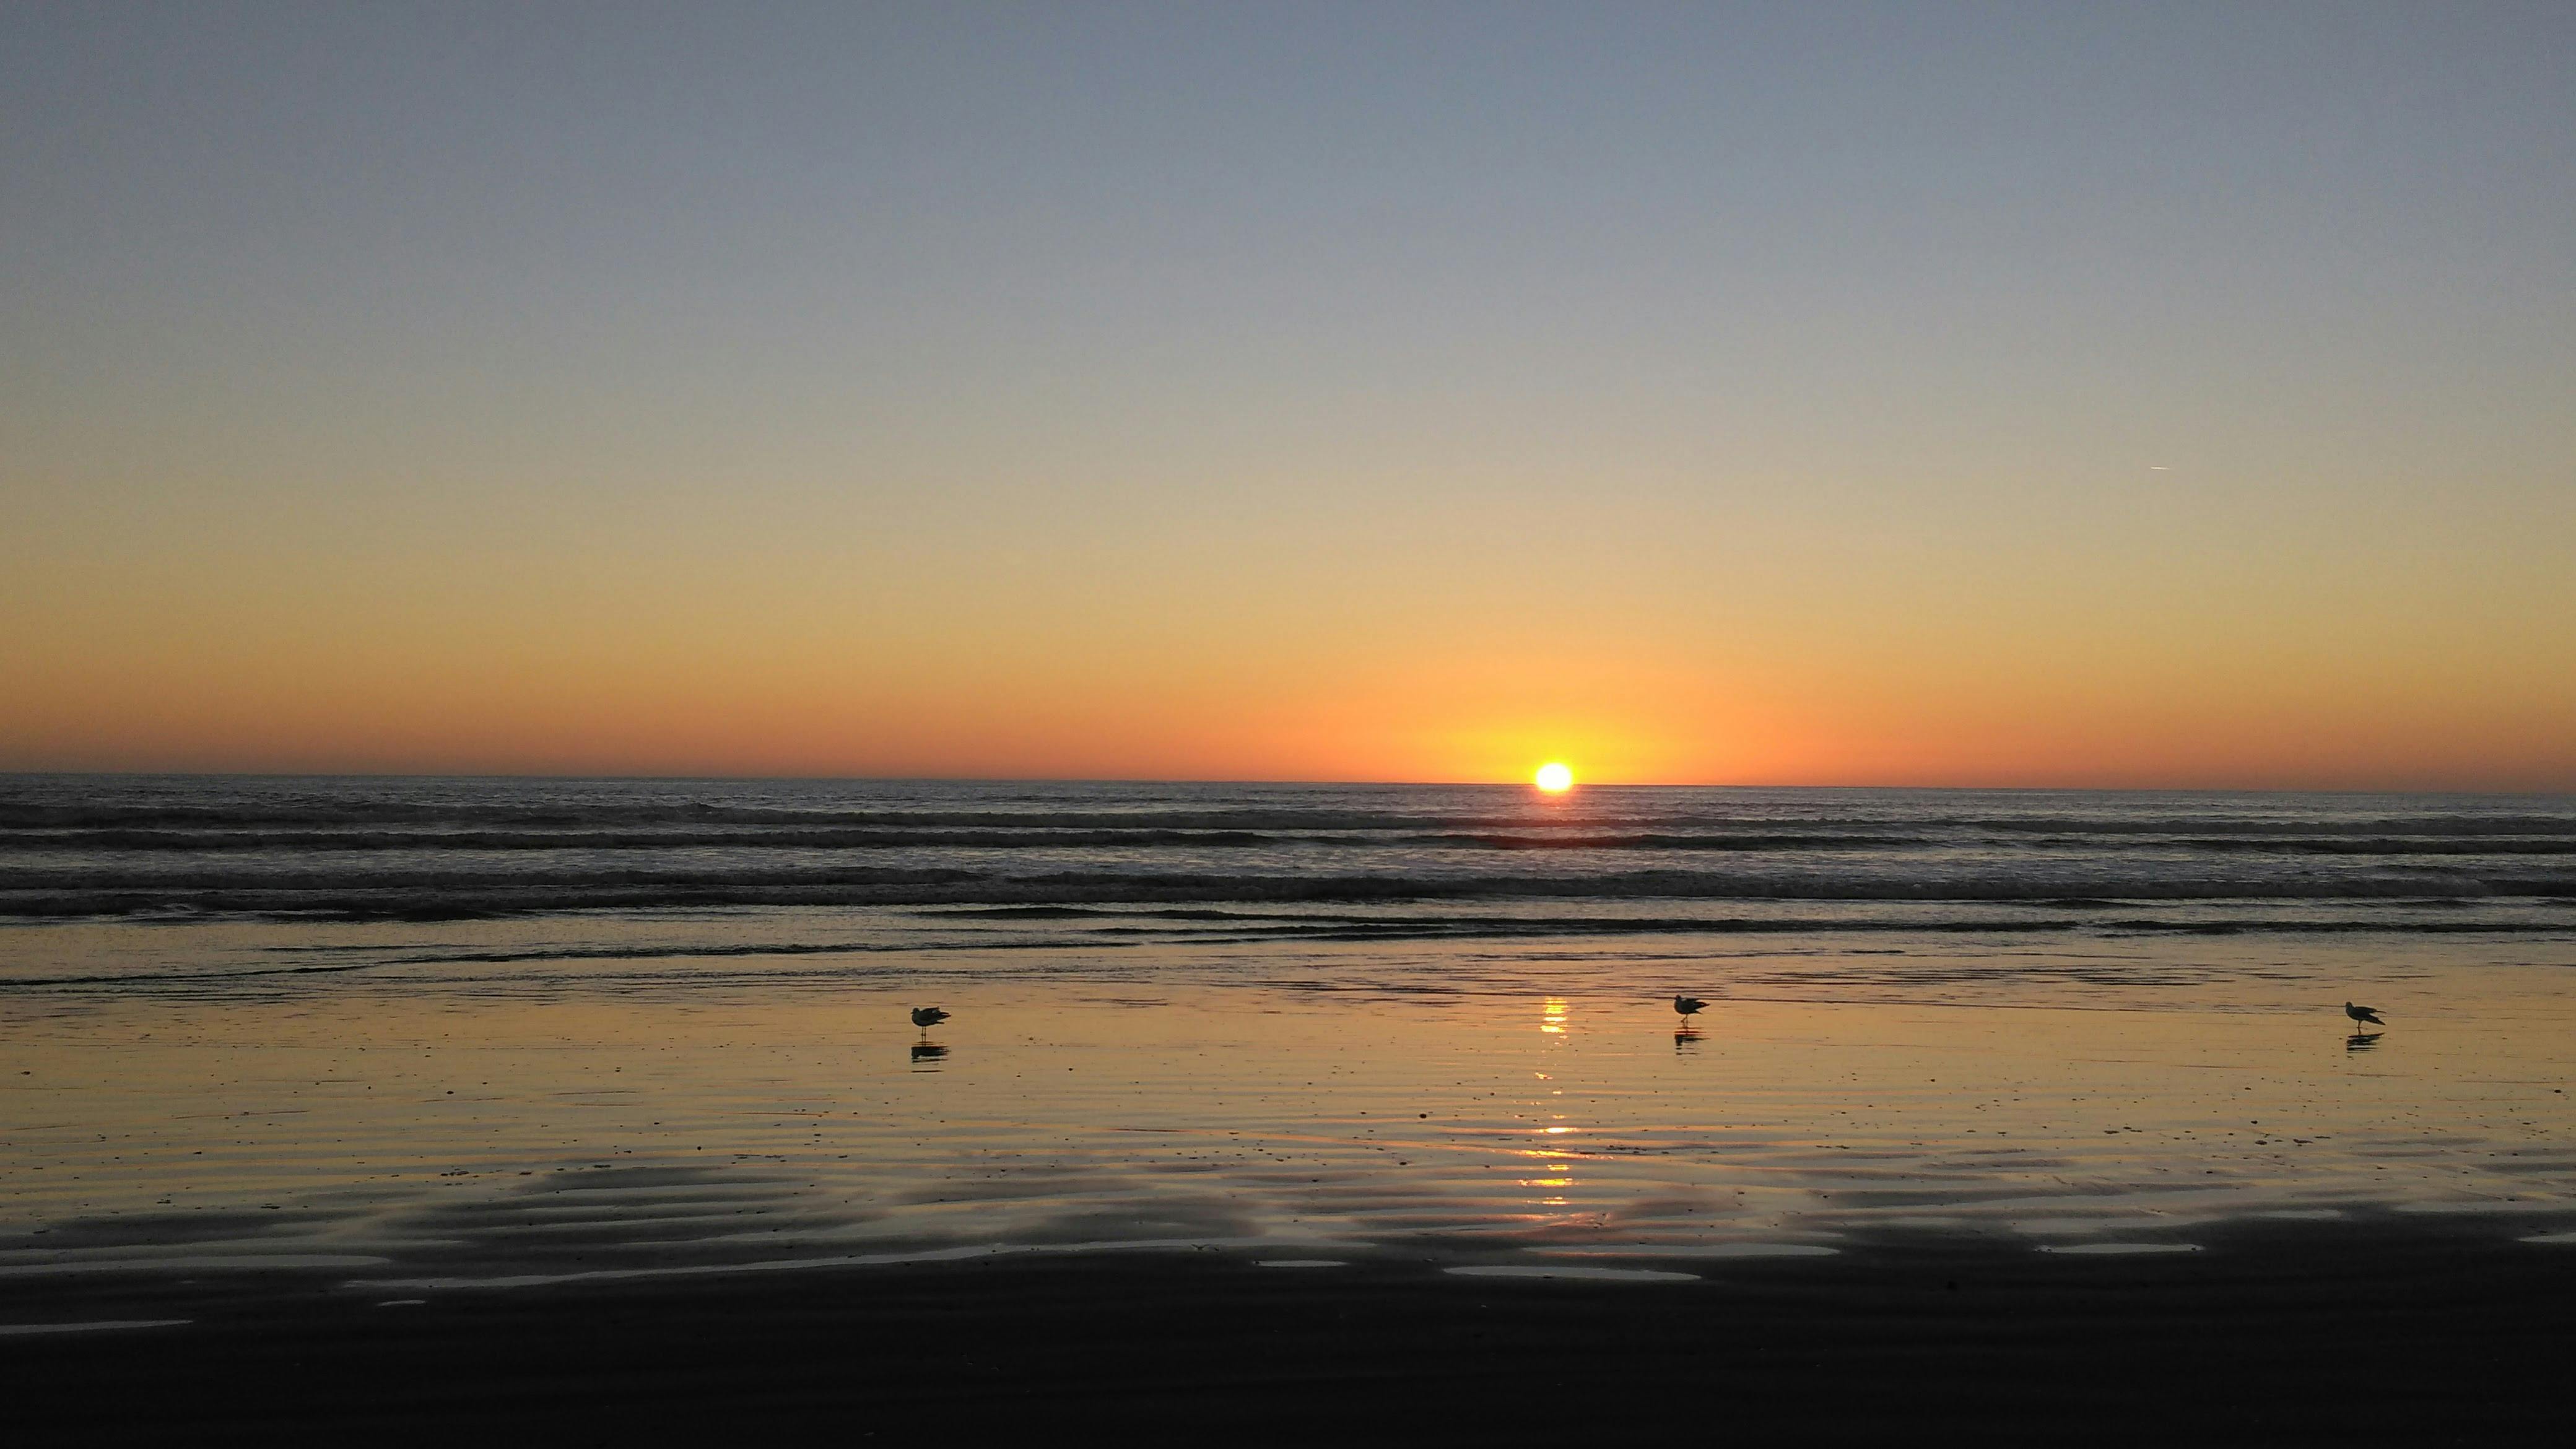 Free stock photo of Sunset peaceful